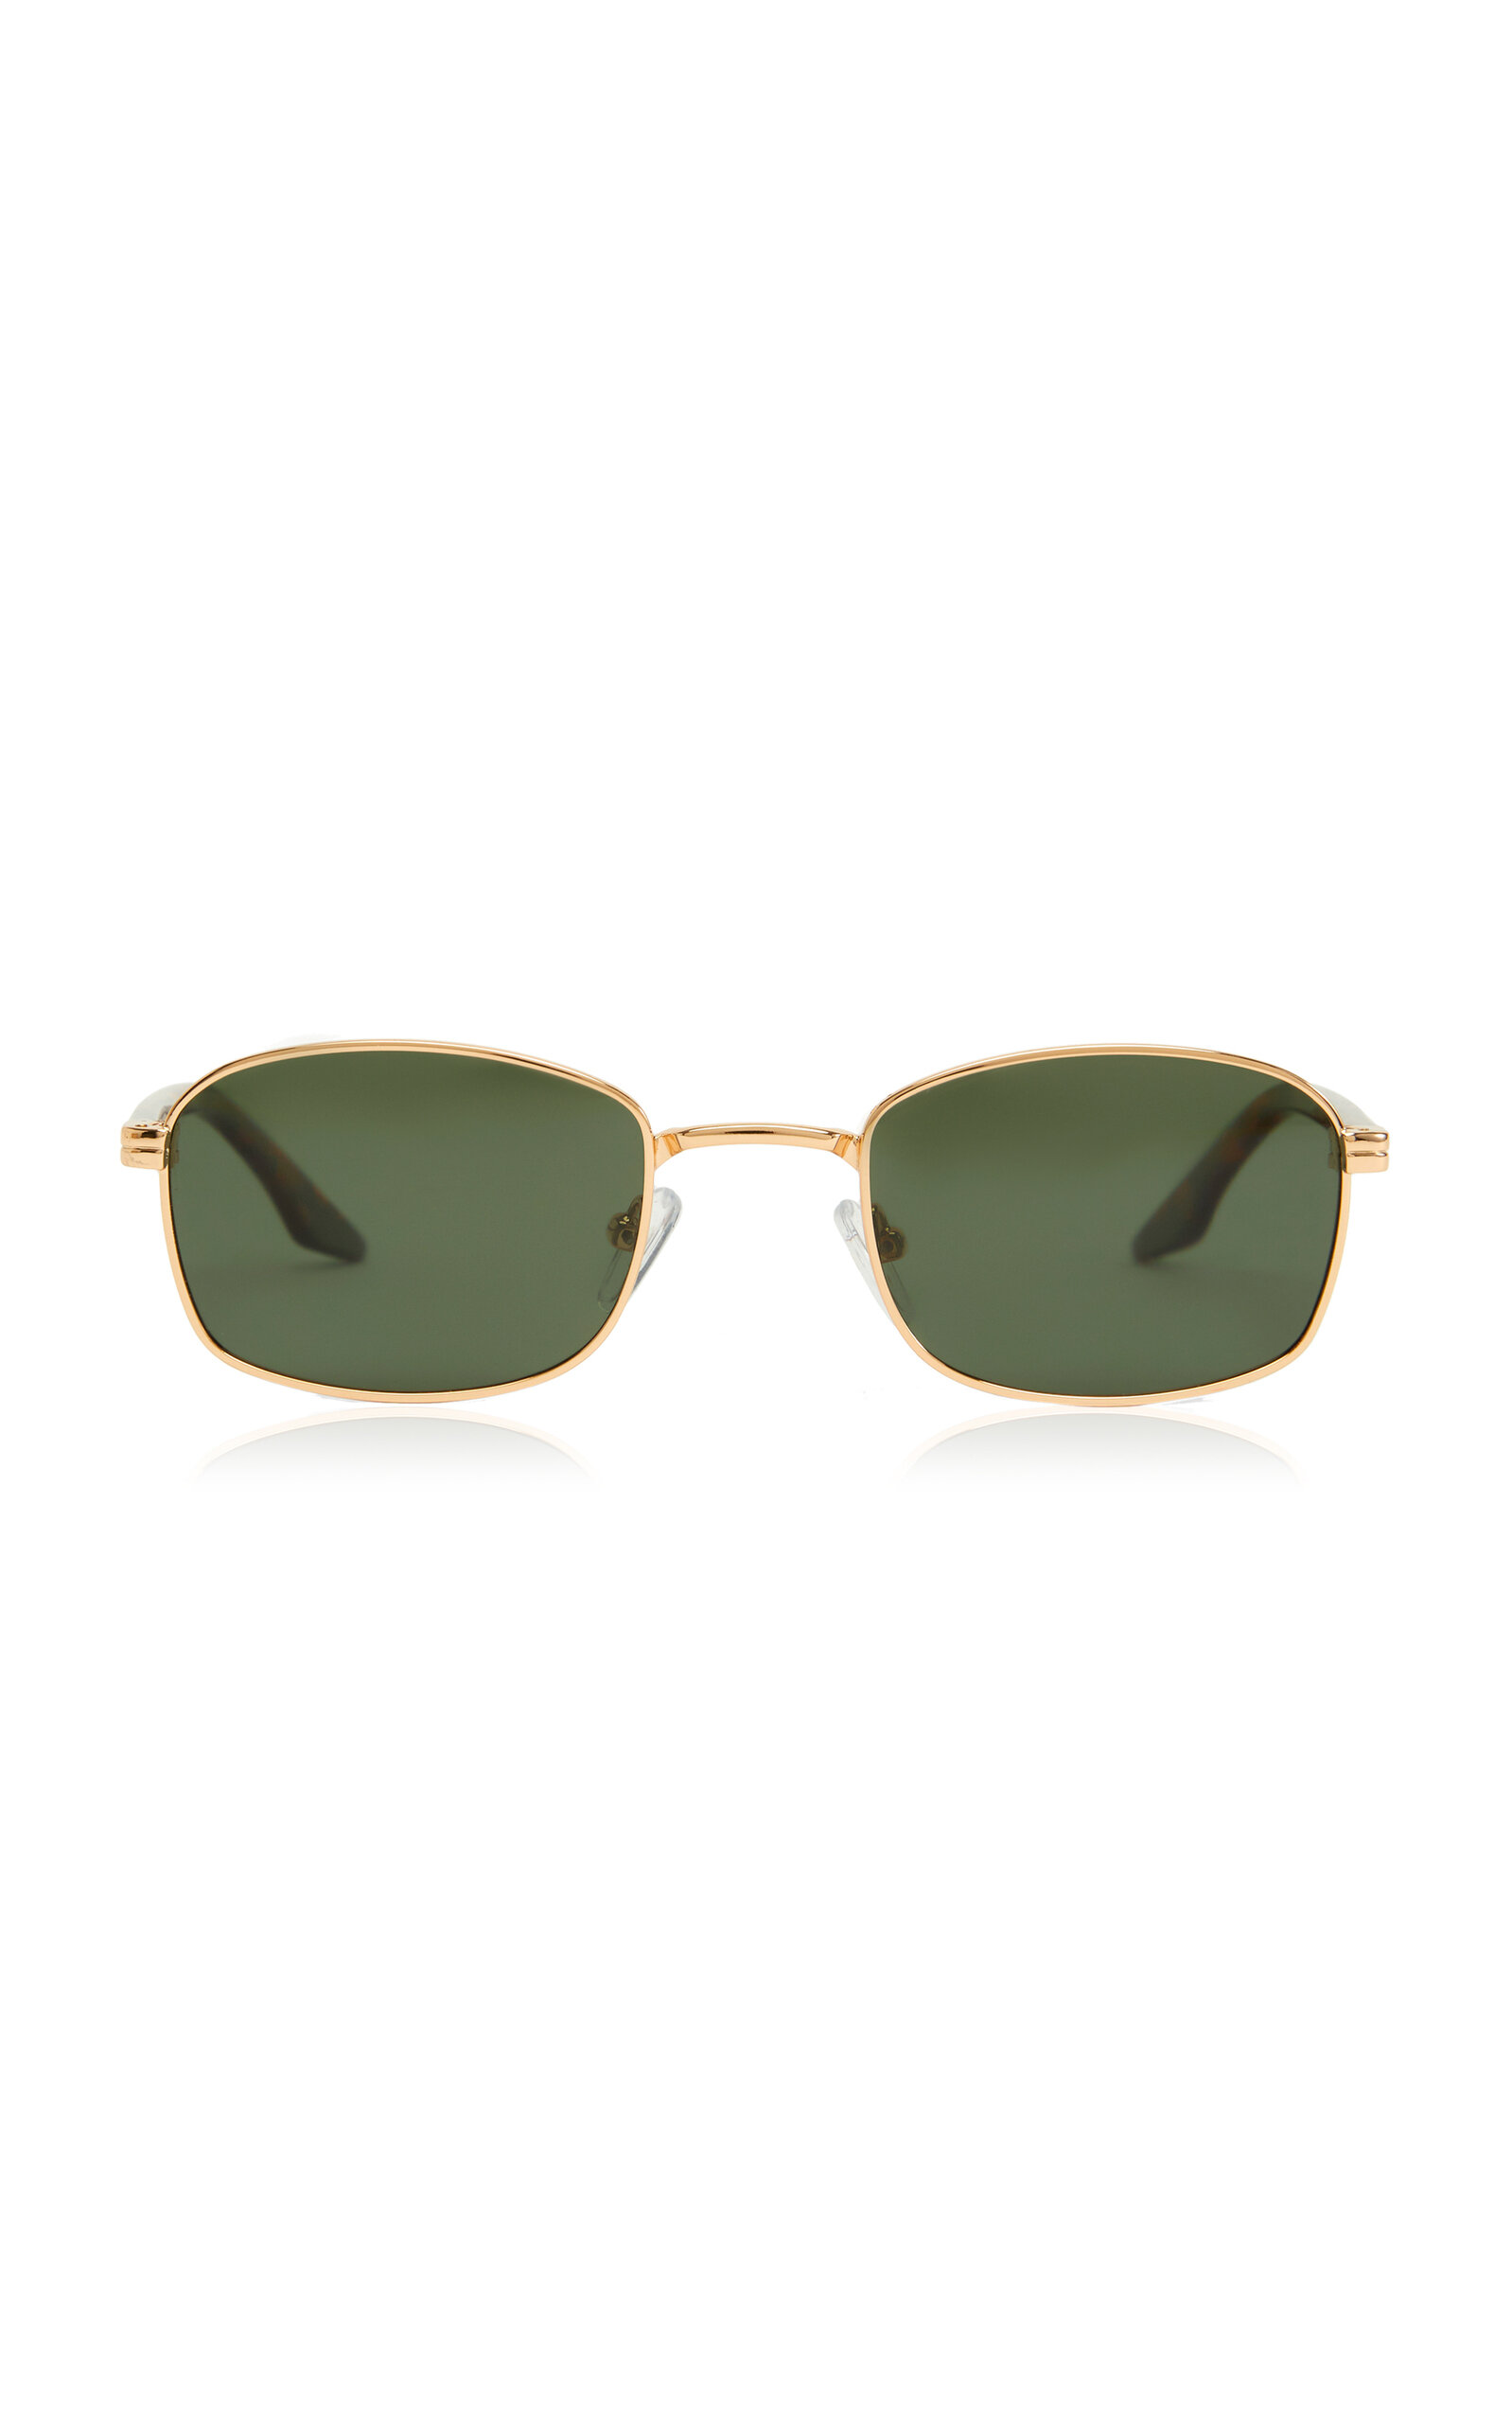 The Lima Square-Frame Metal Sunglasses